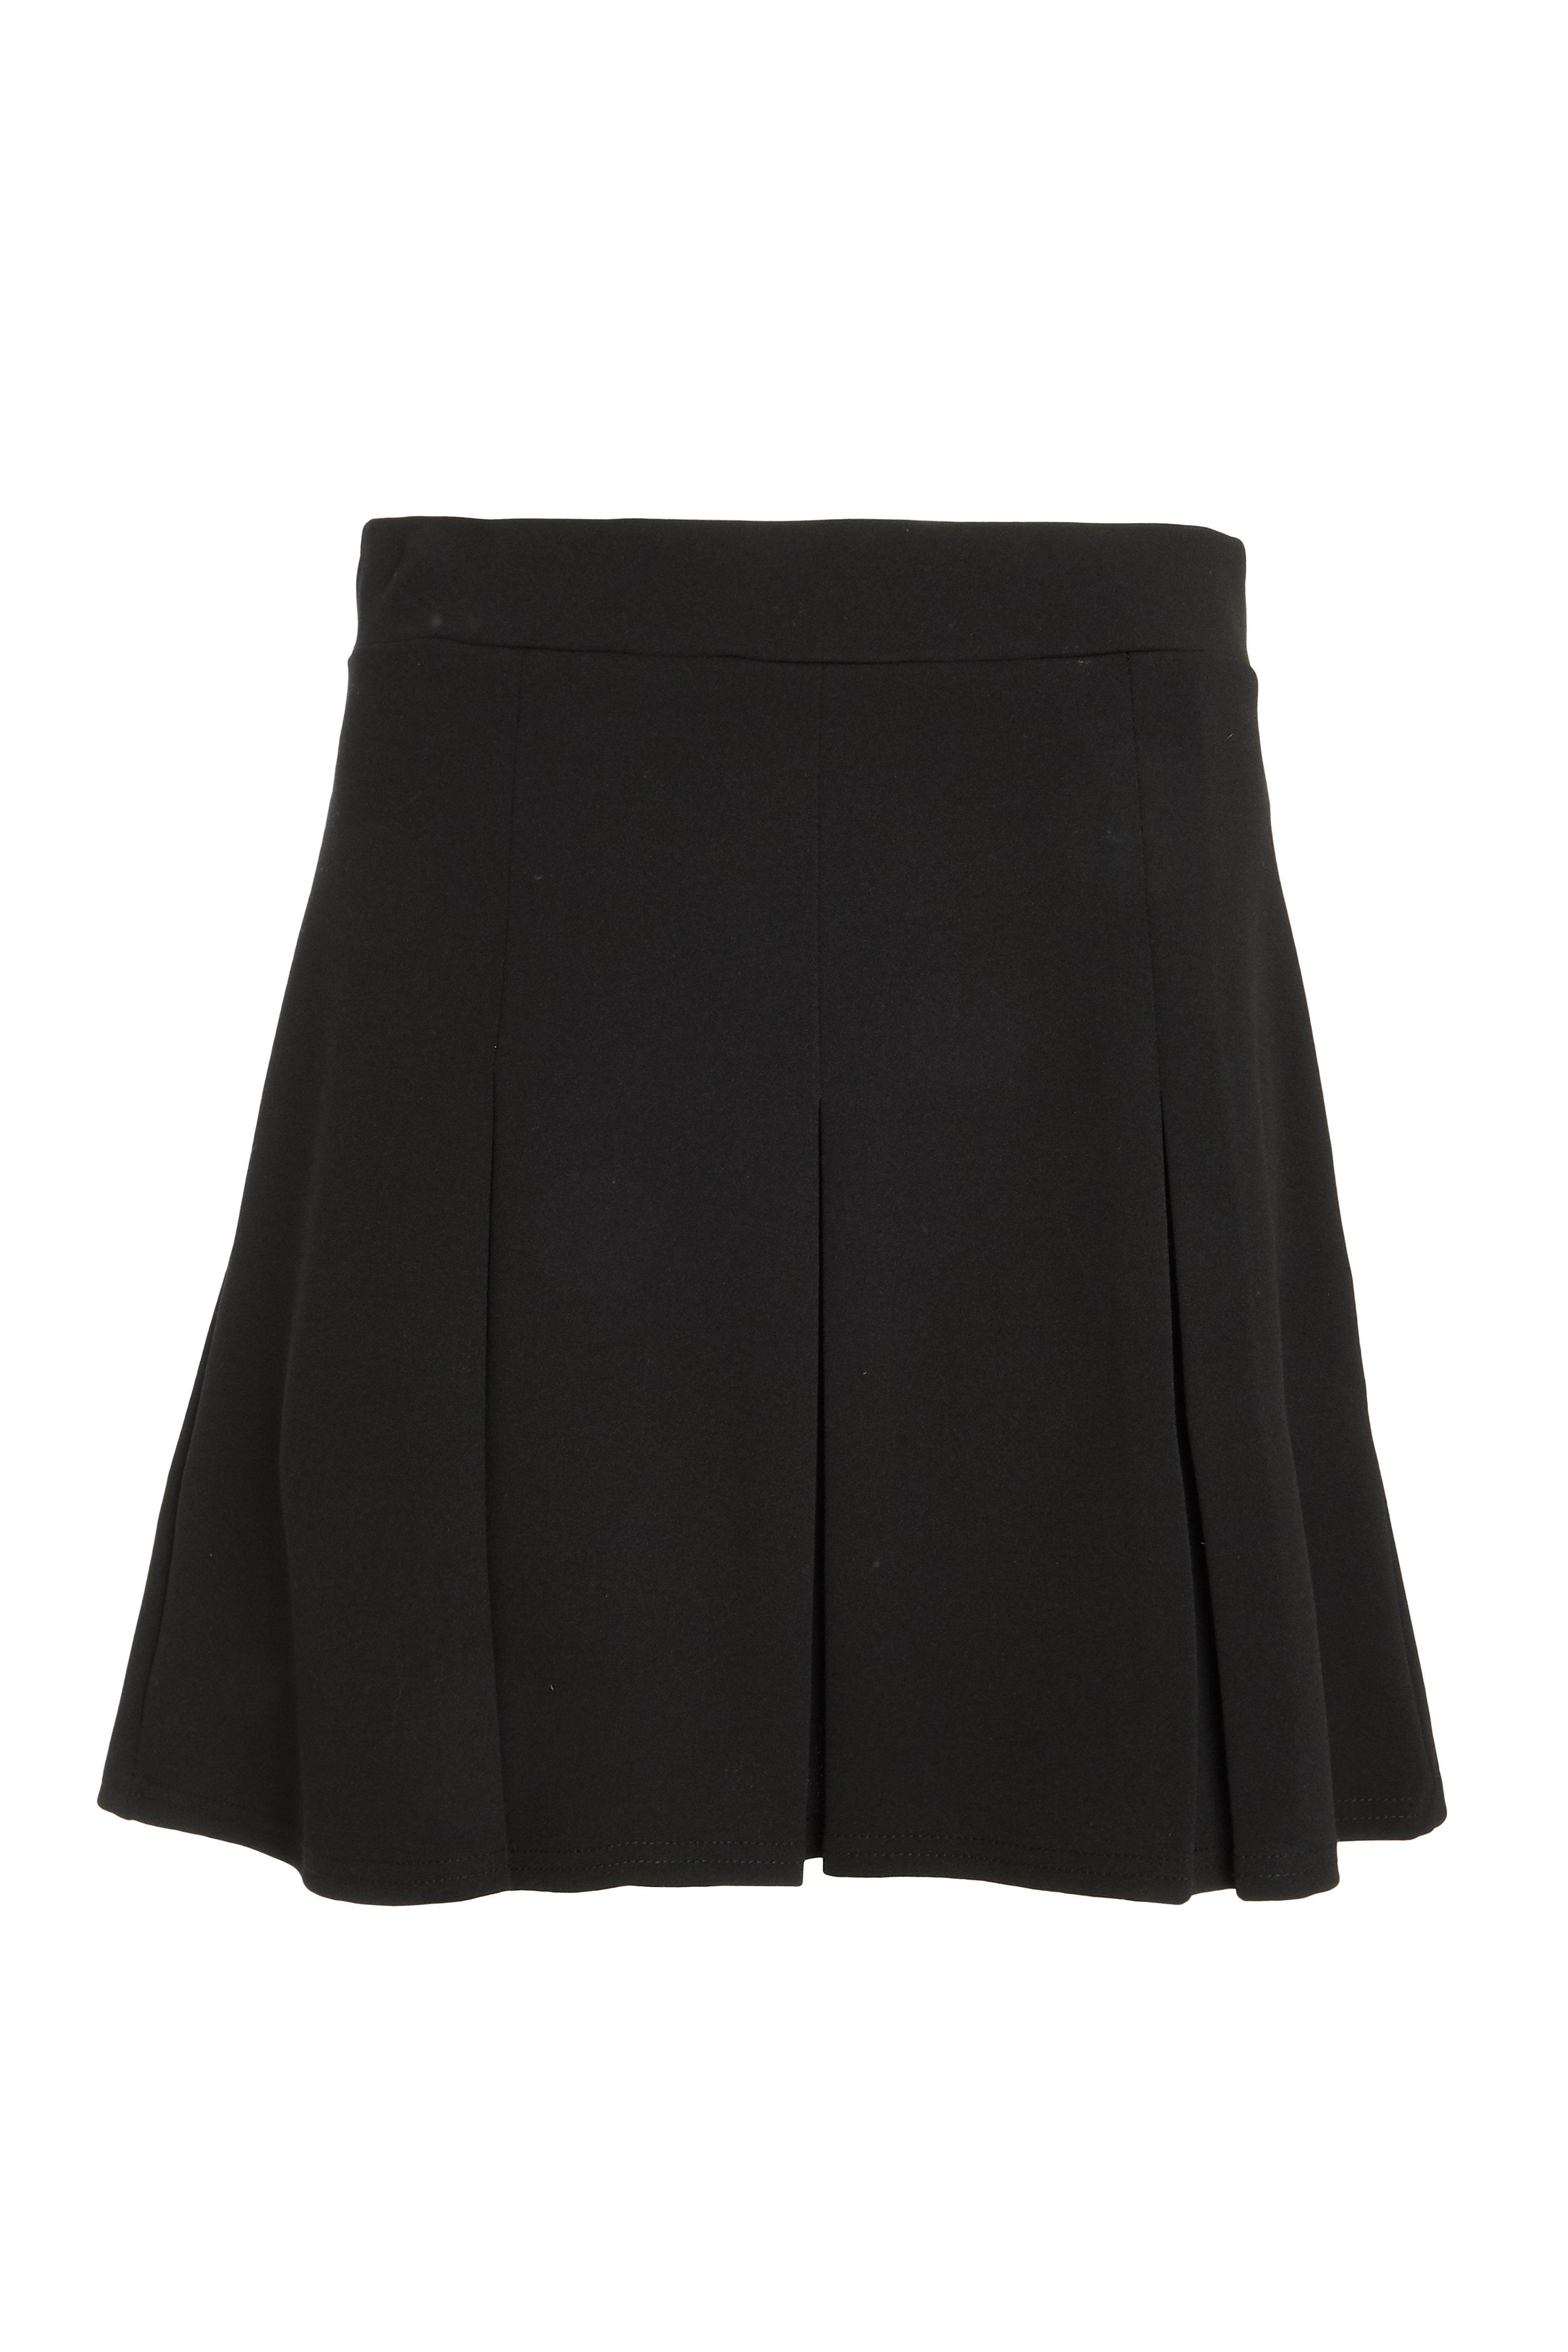 Very Short Skirts Quiz | vlr.eng.br